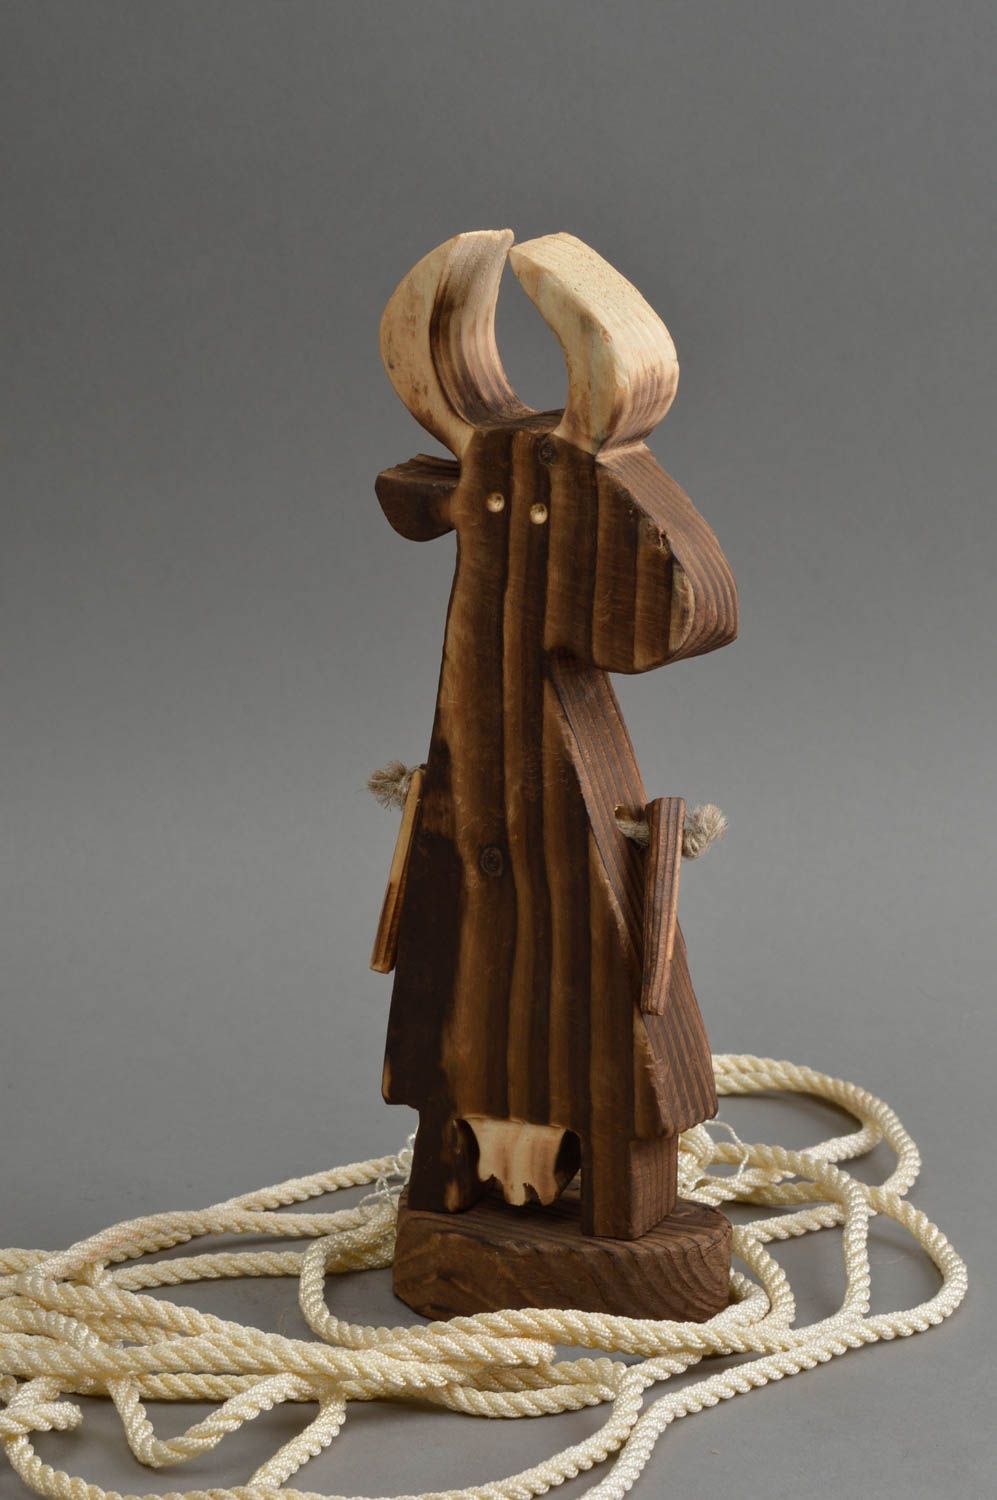 Beautiful homemade wooden statuette unusual wooden figurine gift ideas photo 1